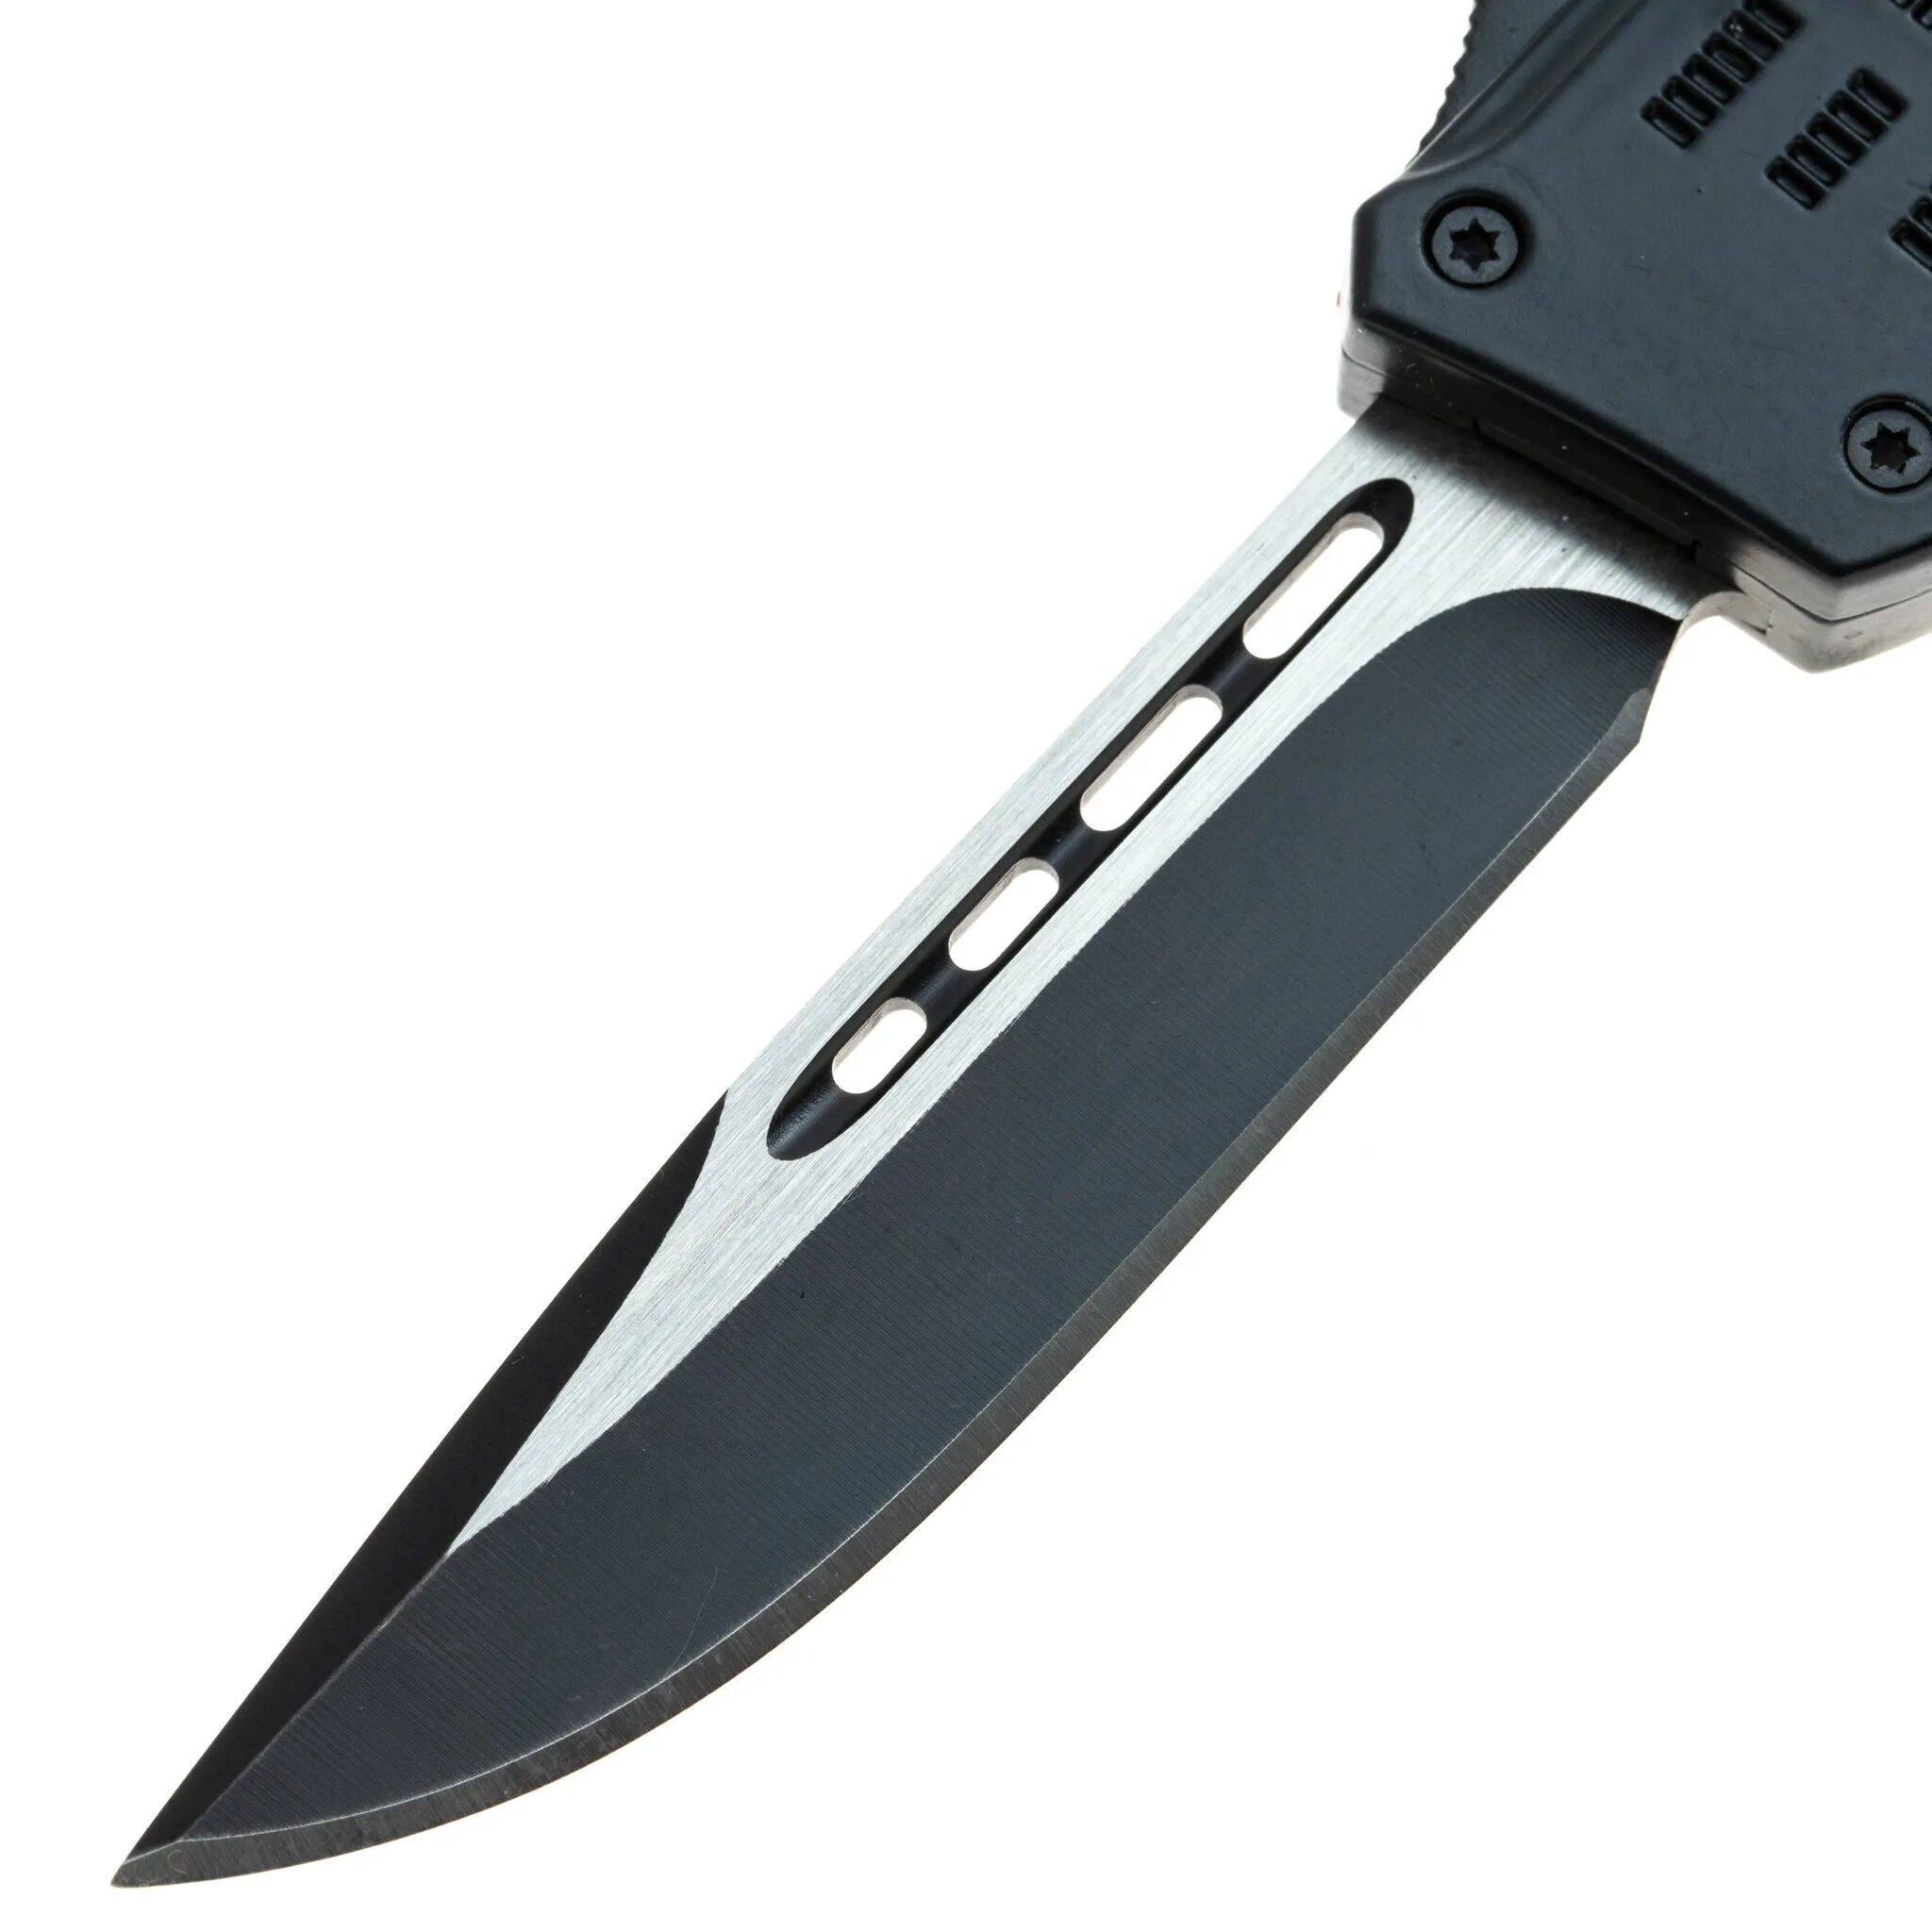 Нож шип ухорез. Нож Viking Nordway. Фронтальный нож Viking Nordway шип ma012-3. Автоматический фронтальный нож ma298. Фронтальный нож ма 294.